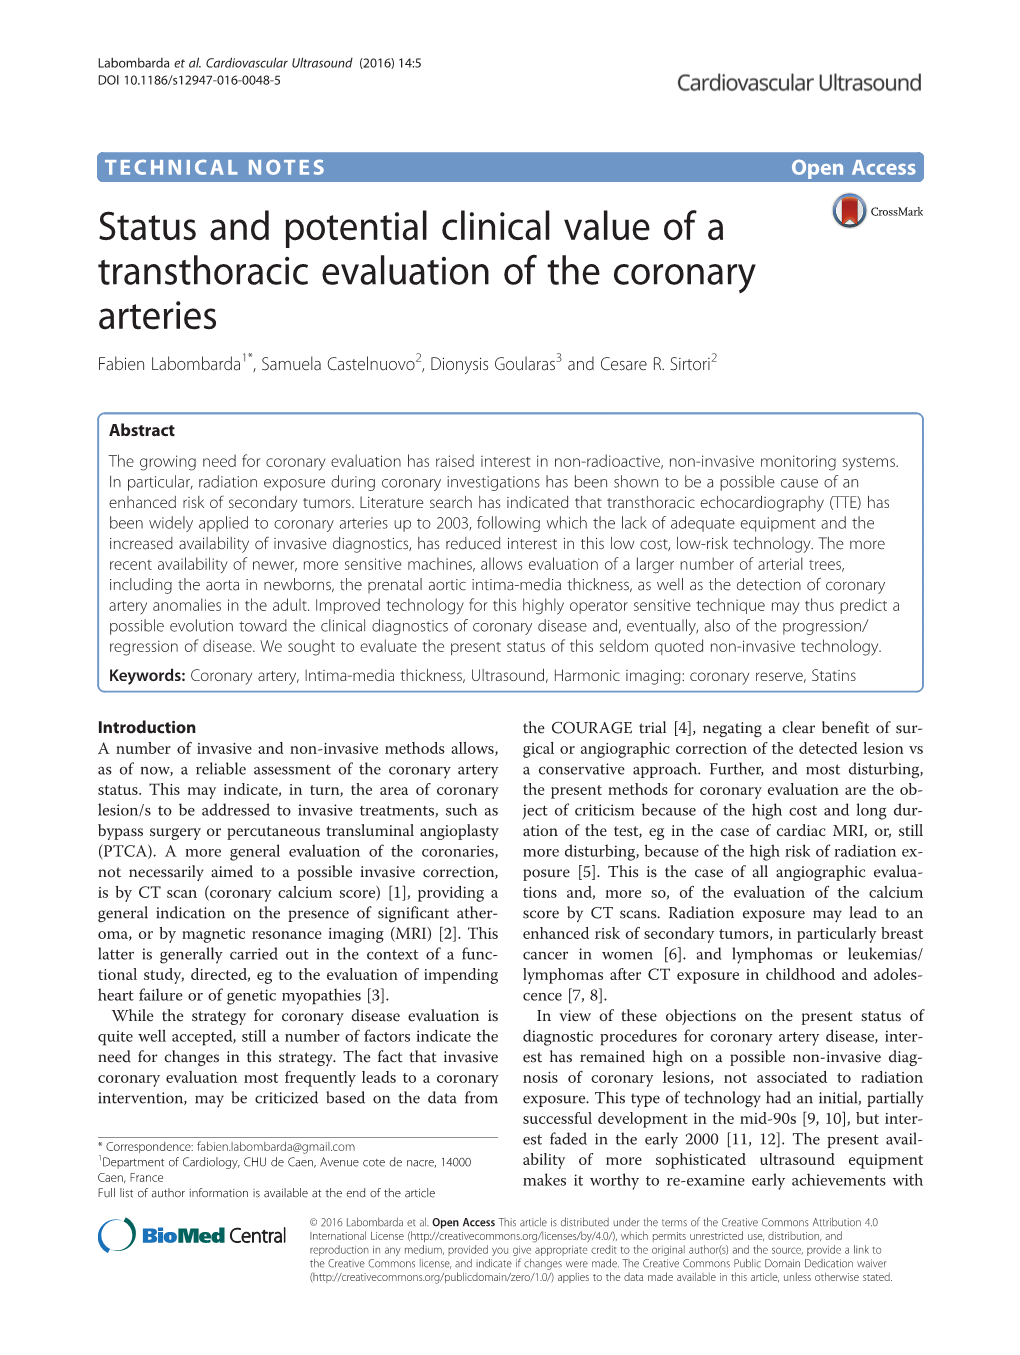 Status and Potential Clinical Value of a Transthoracic Evaluation of the Coronary Arteries Fabien Labombarda1*, Samuela Castelnuovo2, Dionysis Goularas3 and Cesare R